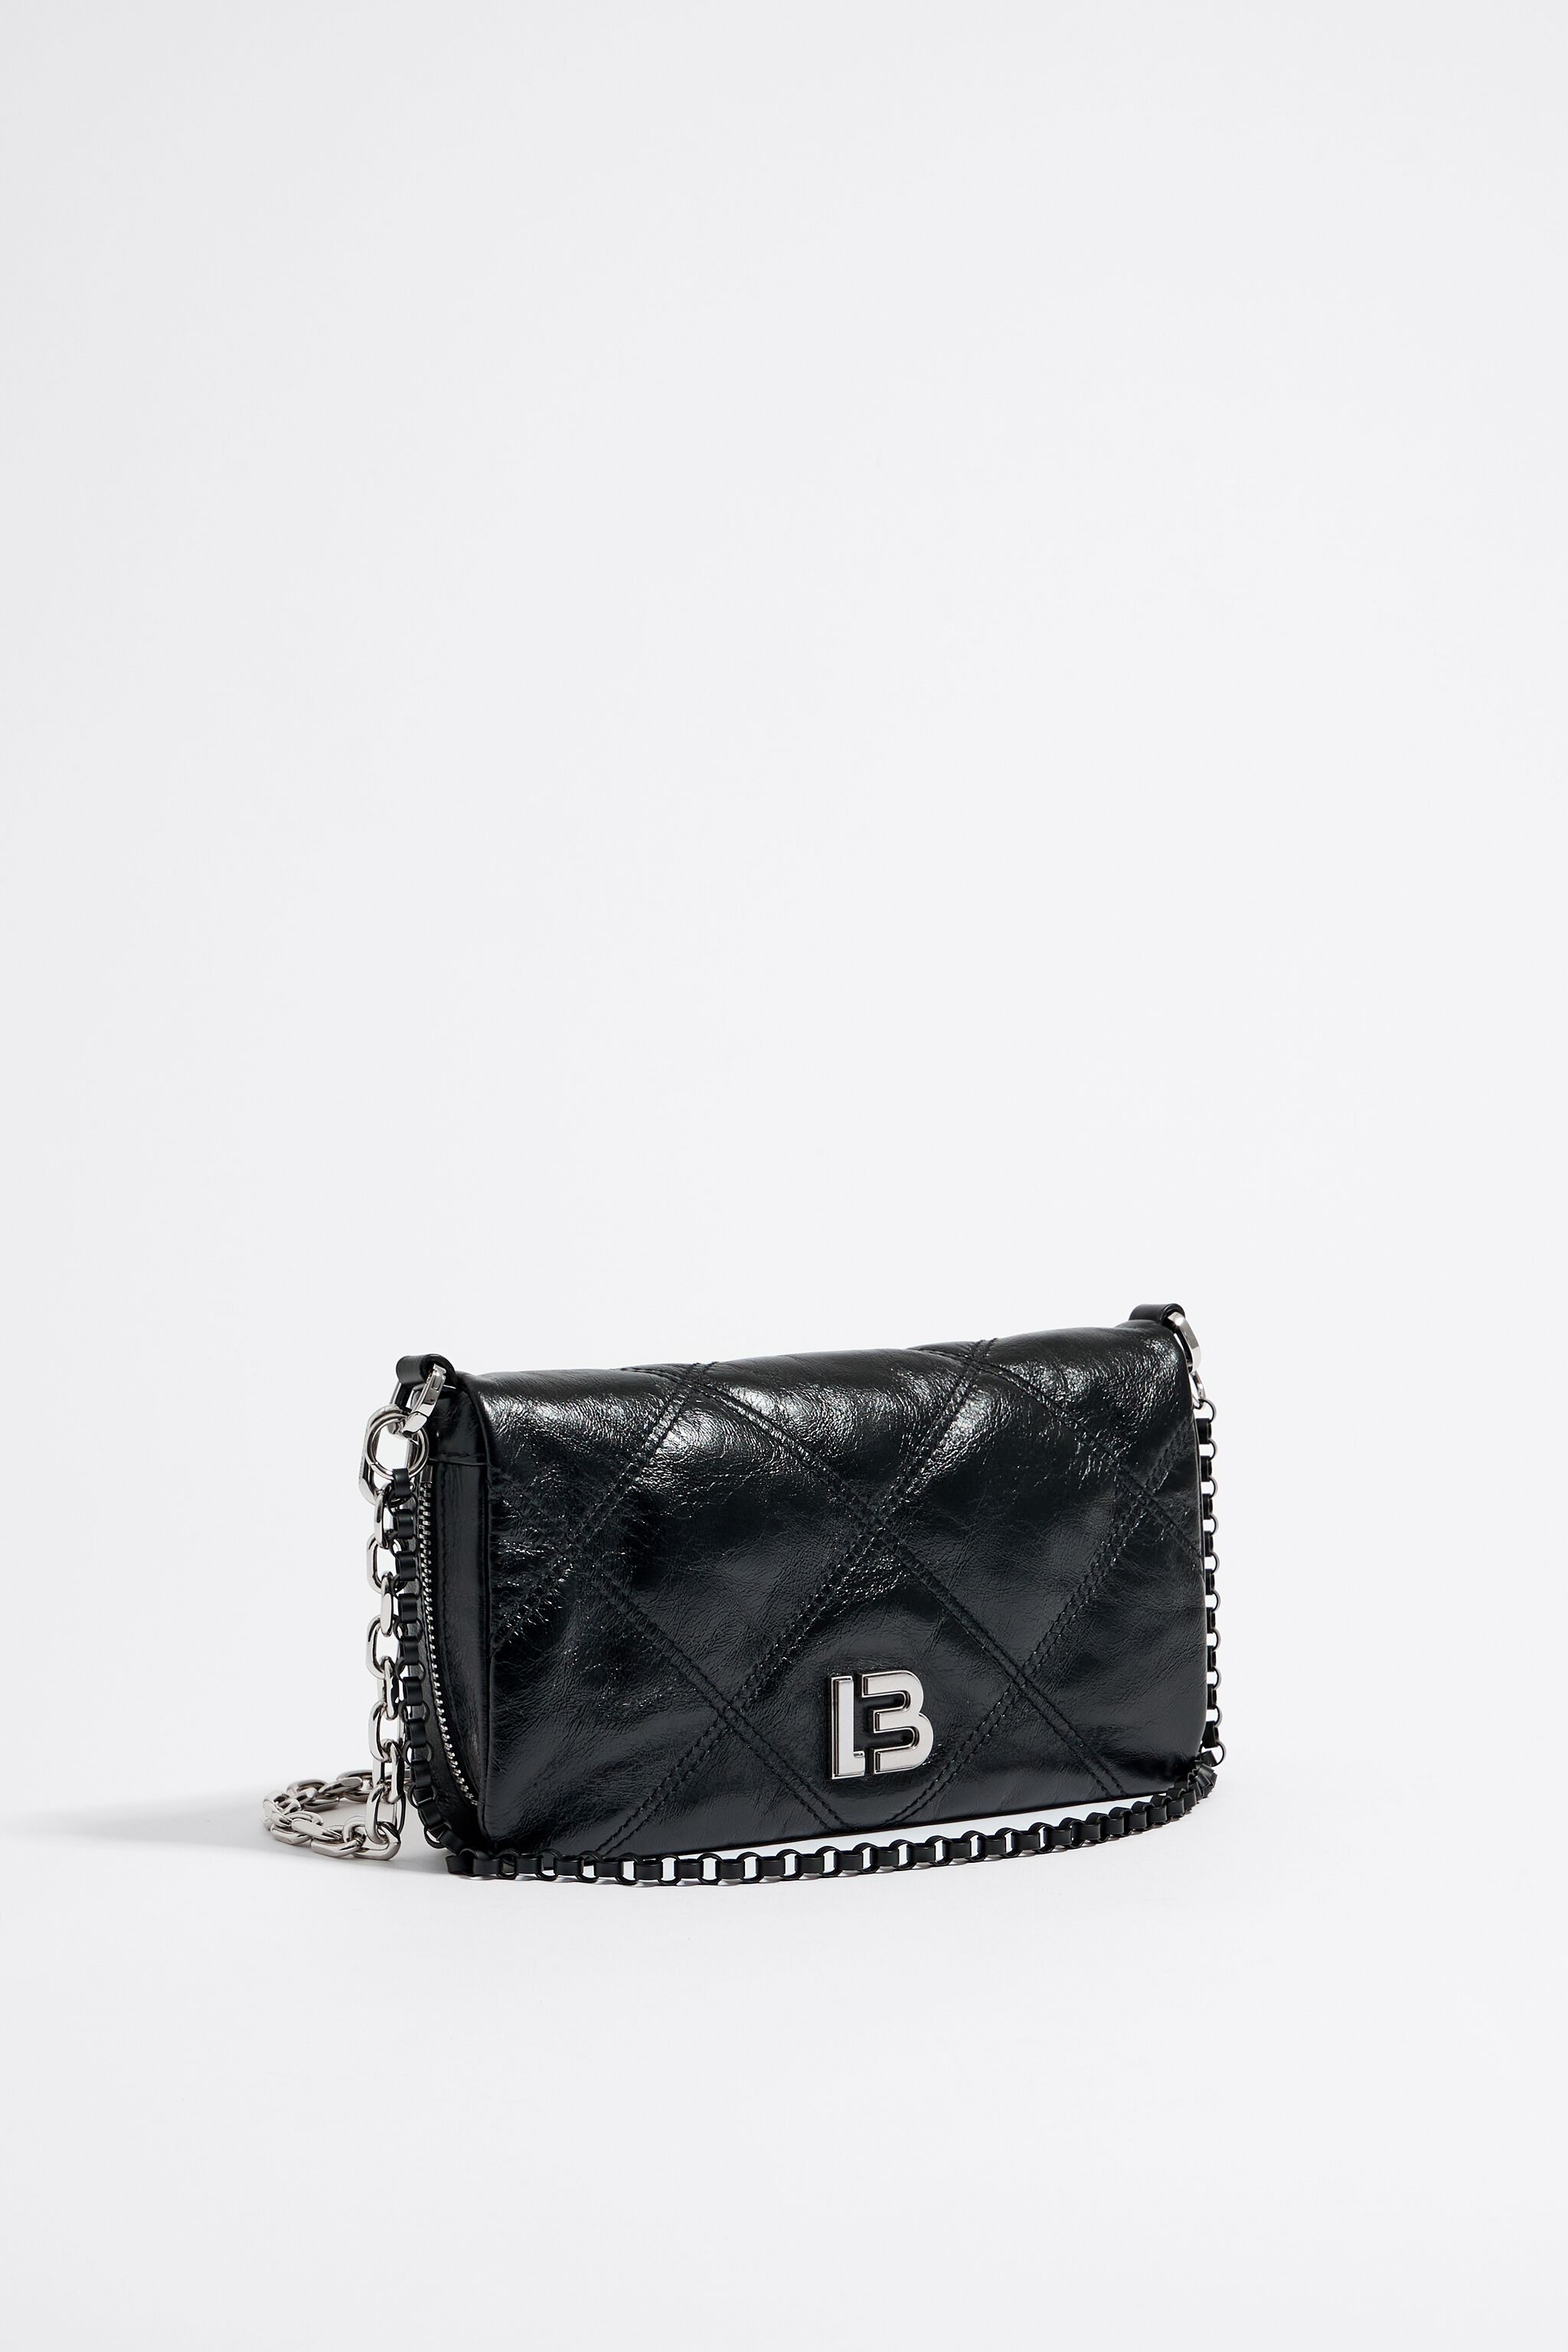 Small black leather crossbody bag